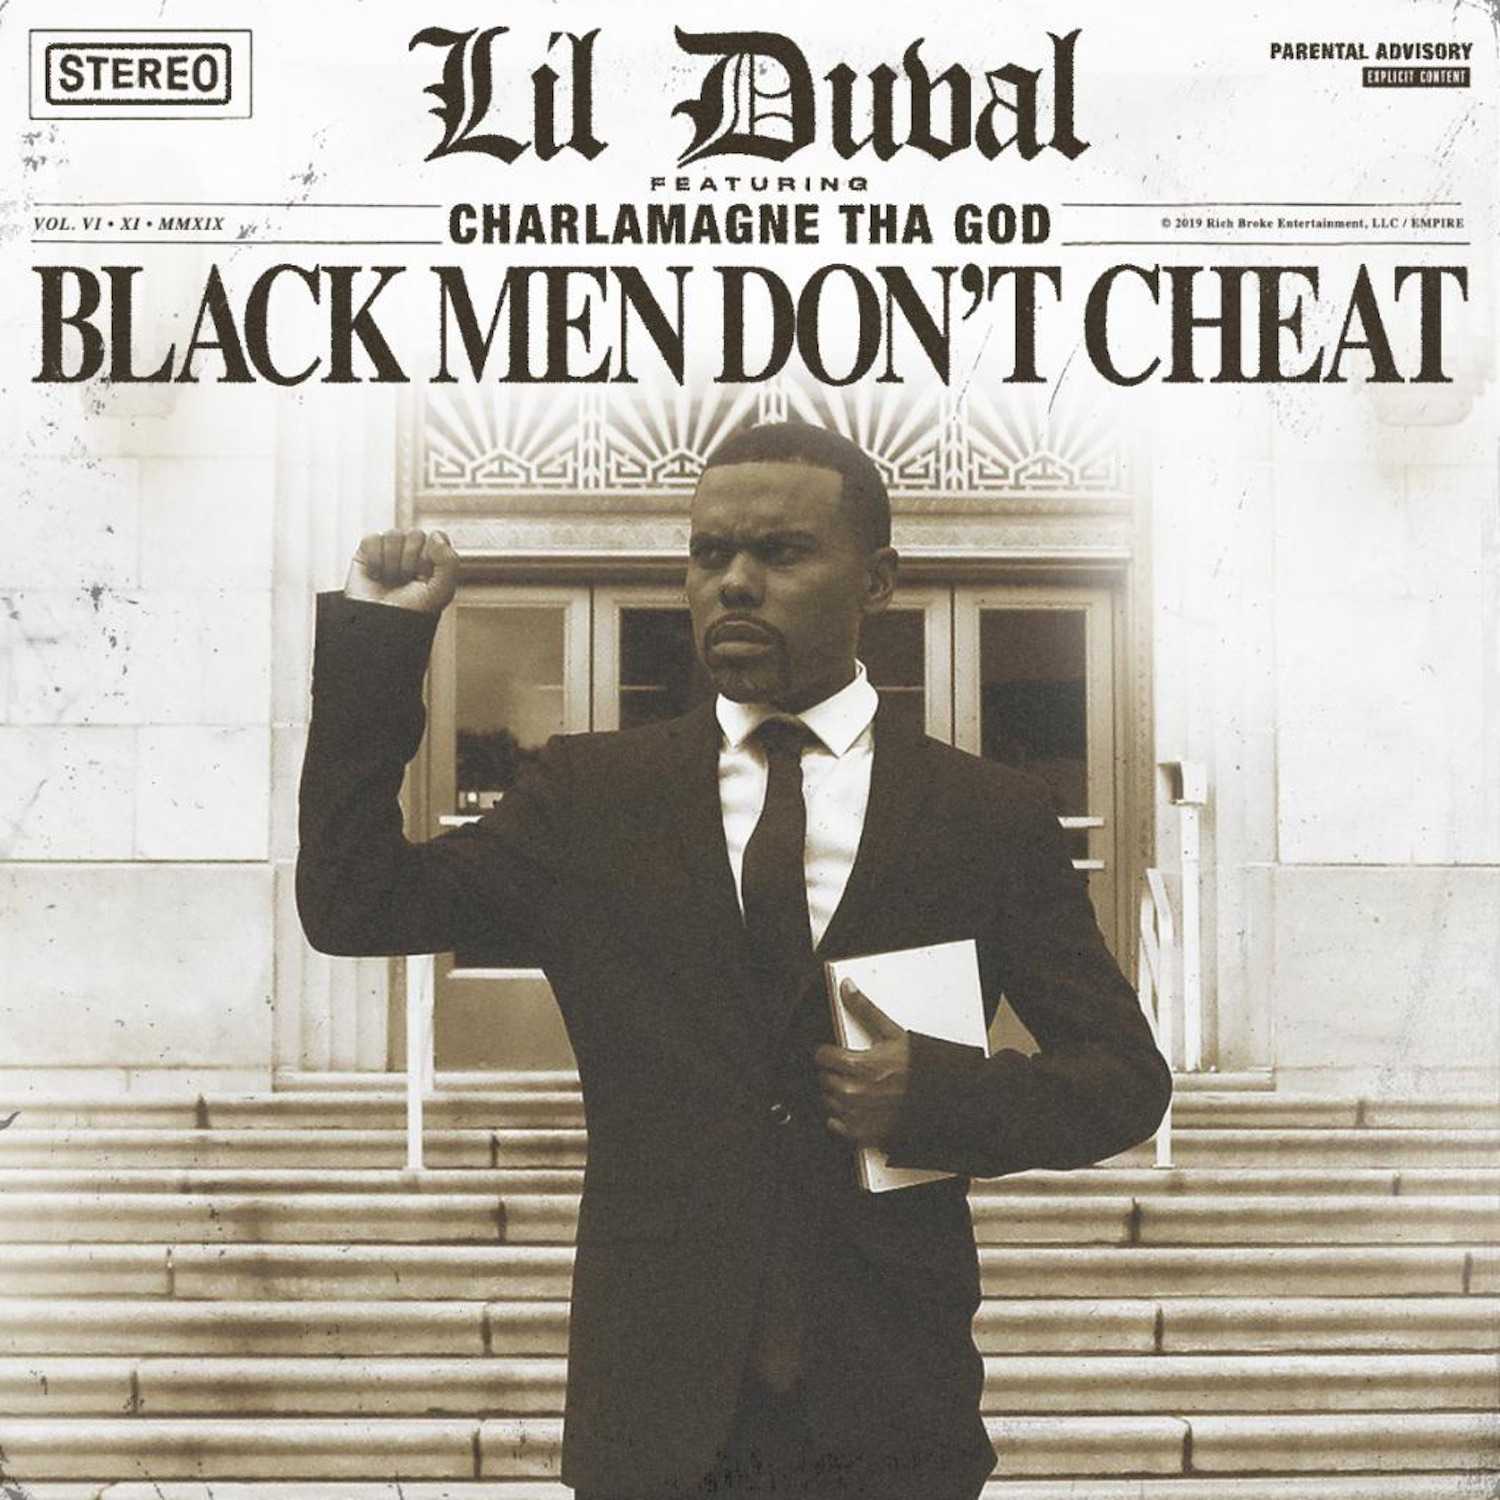 Lil Duval Ft.Charlamagne tha God - Black Men Dont Cheat 